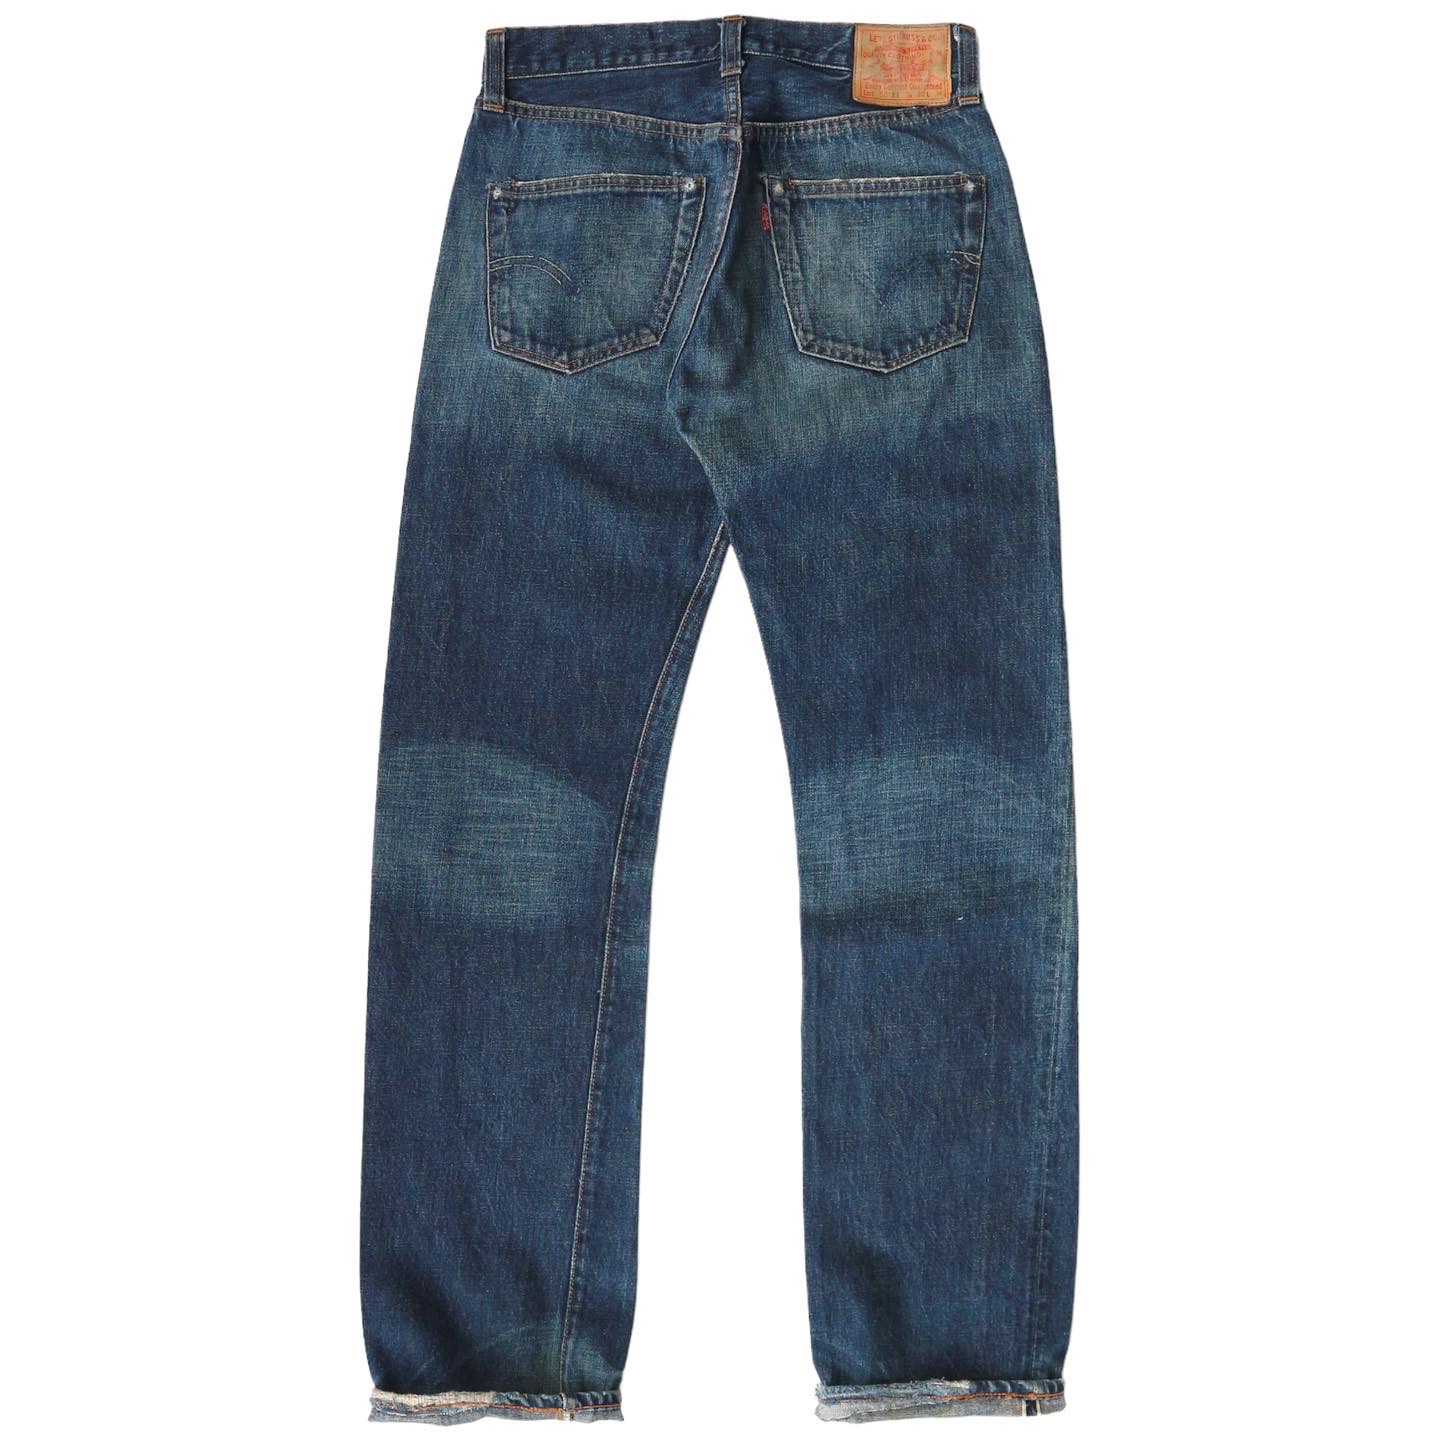 LEVI'S VINTAGE CLOTHING Selvedge Denim Jeans 29 denimister